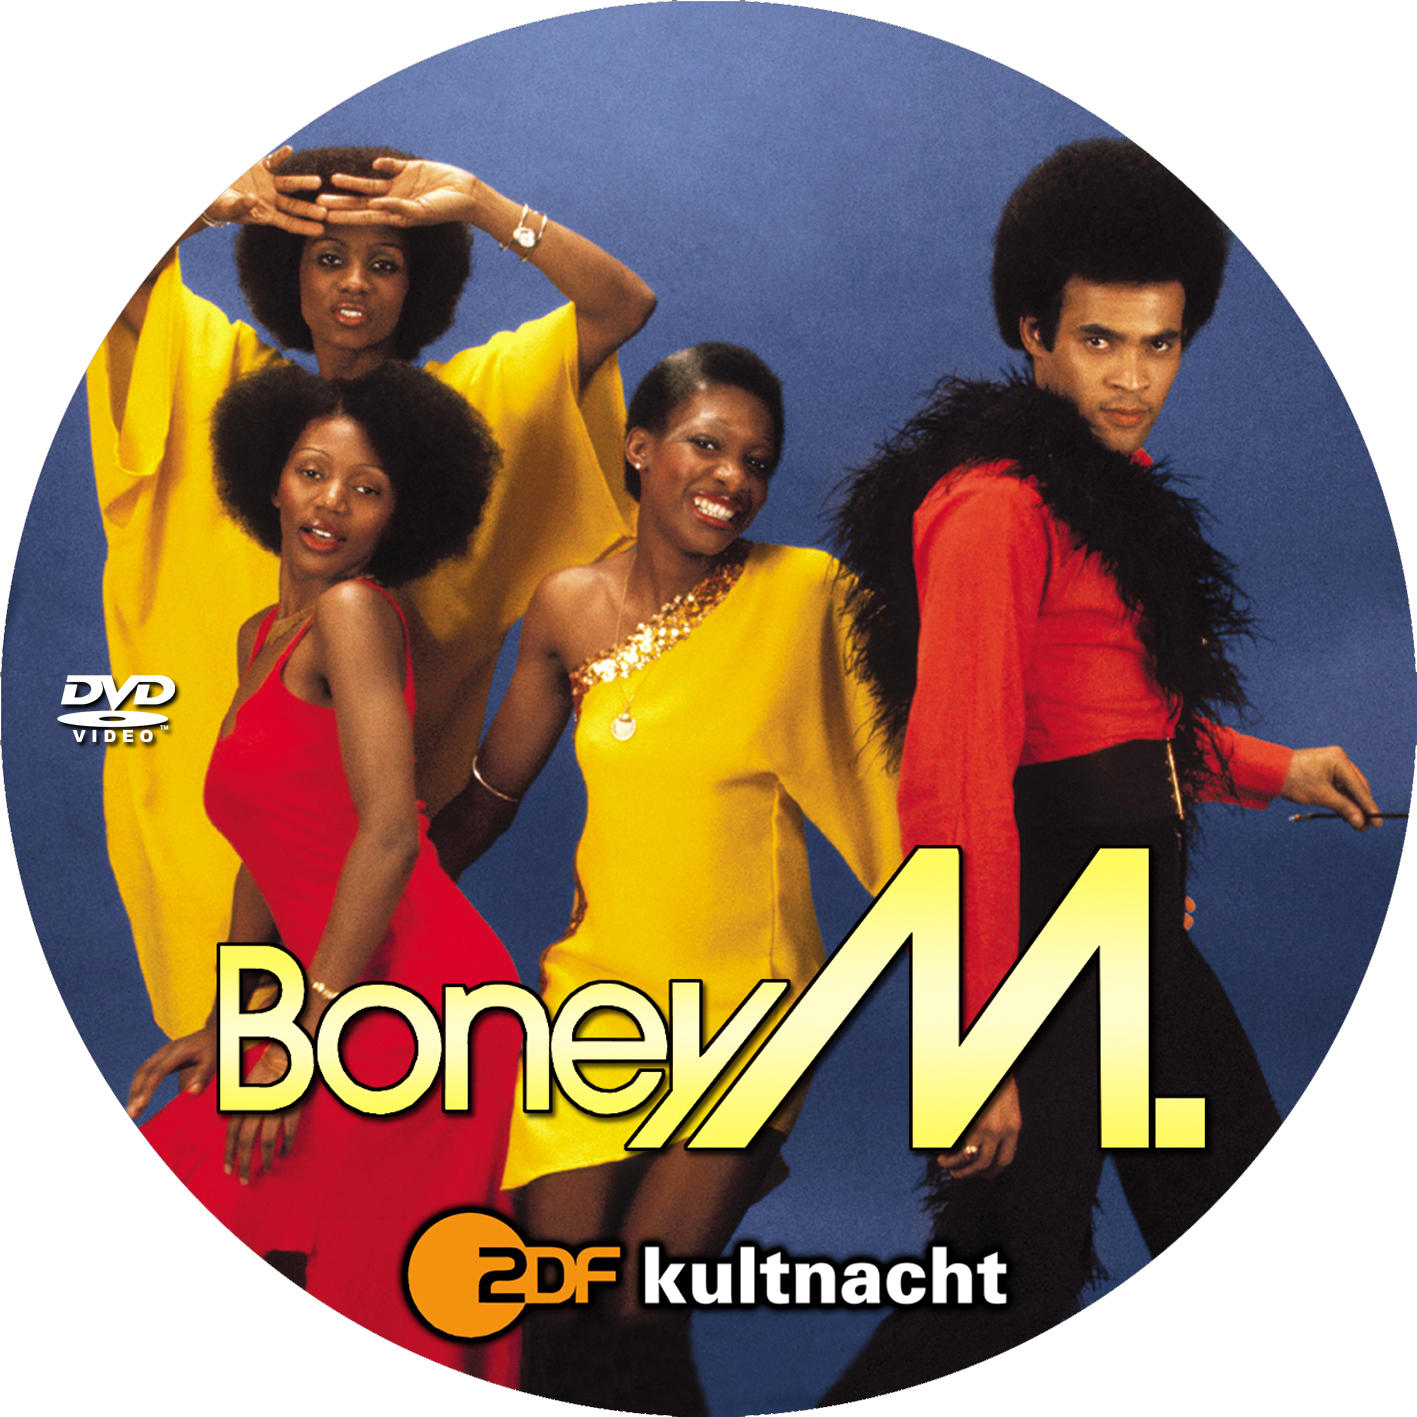 Boney m видео. Группа Boney m.. Группа Boney m. дискография. Группа Boney m. в 80. Группа Бони м 1975г.